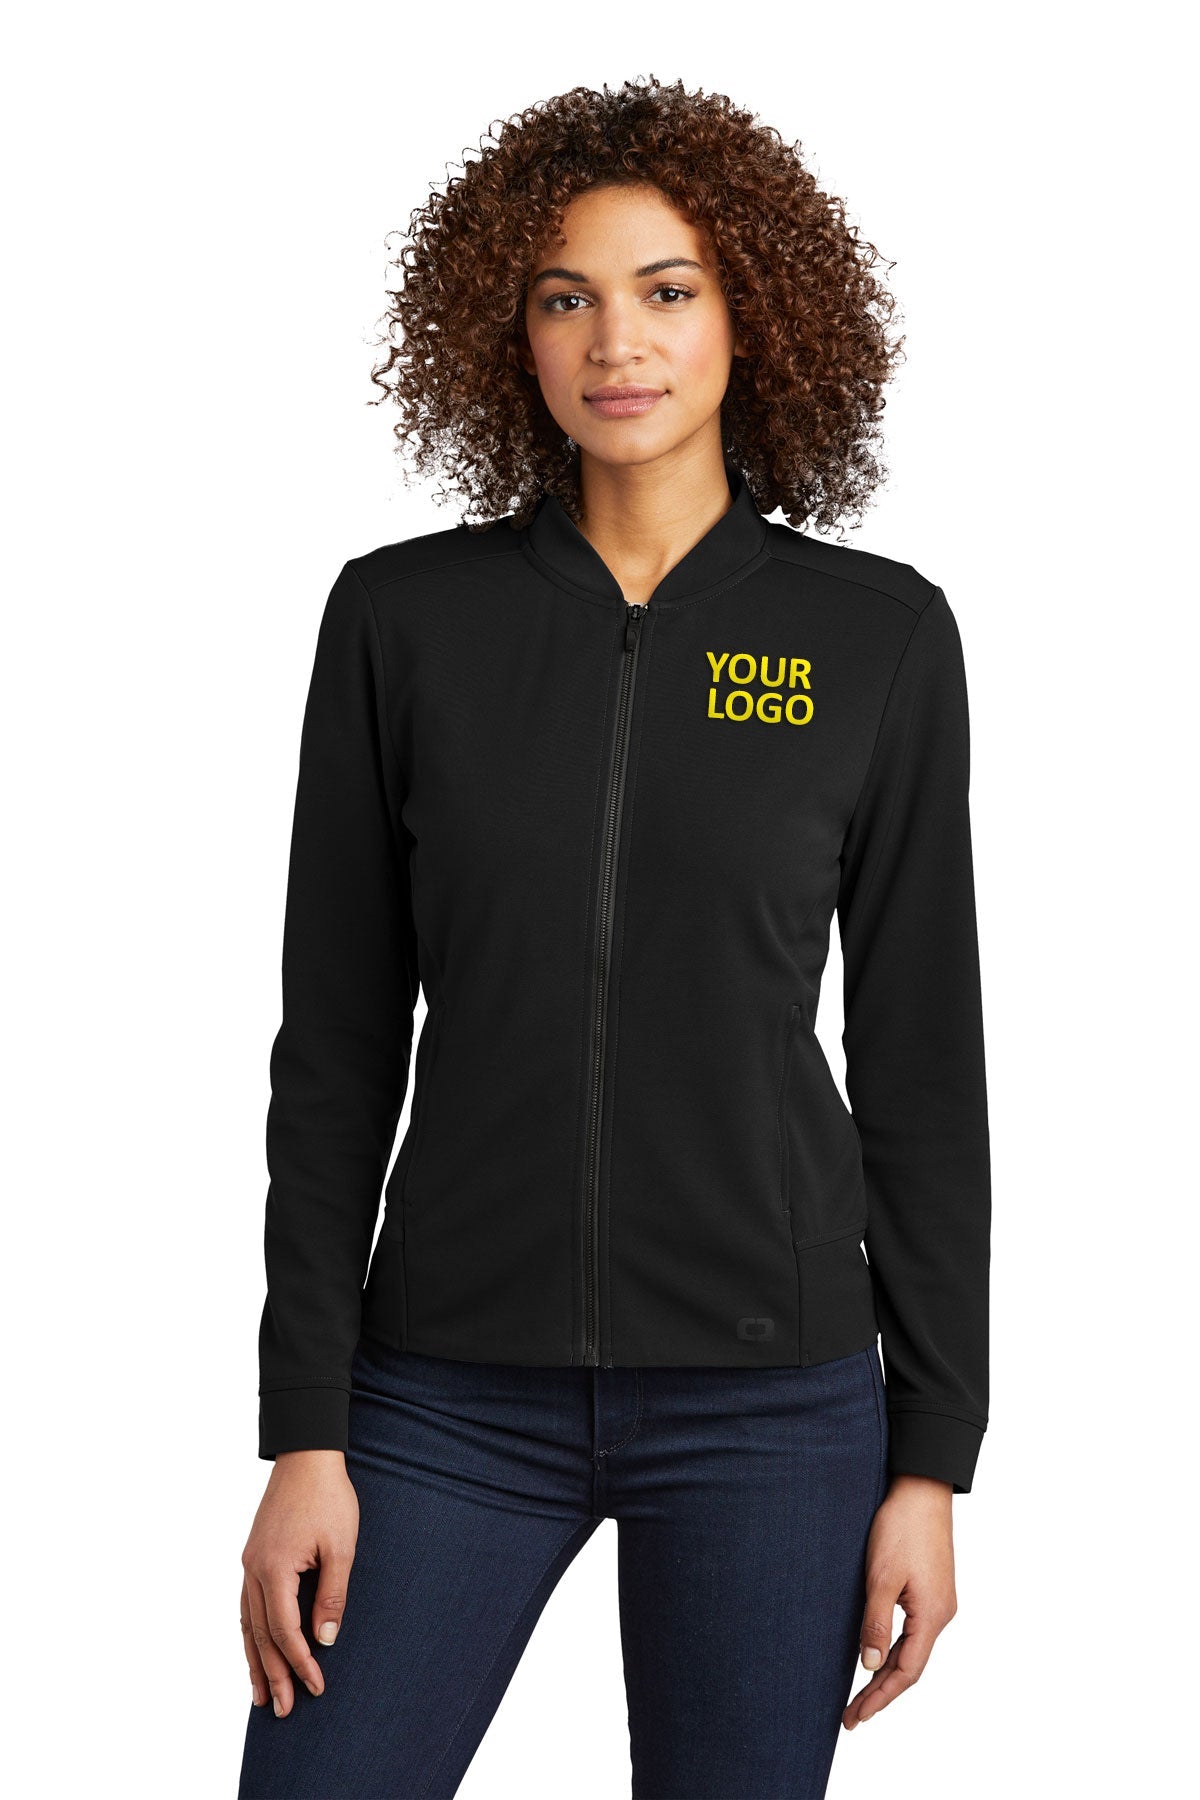 OGIO Blacktop LOG820 sweatshirts with logos